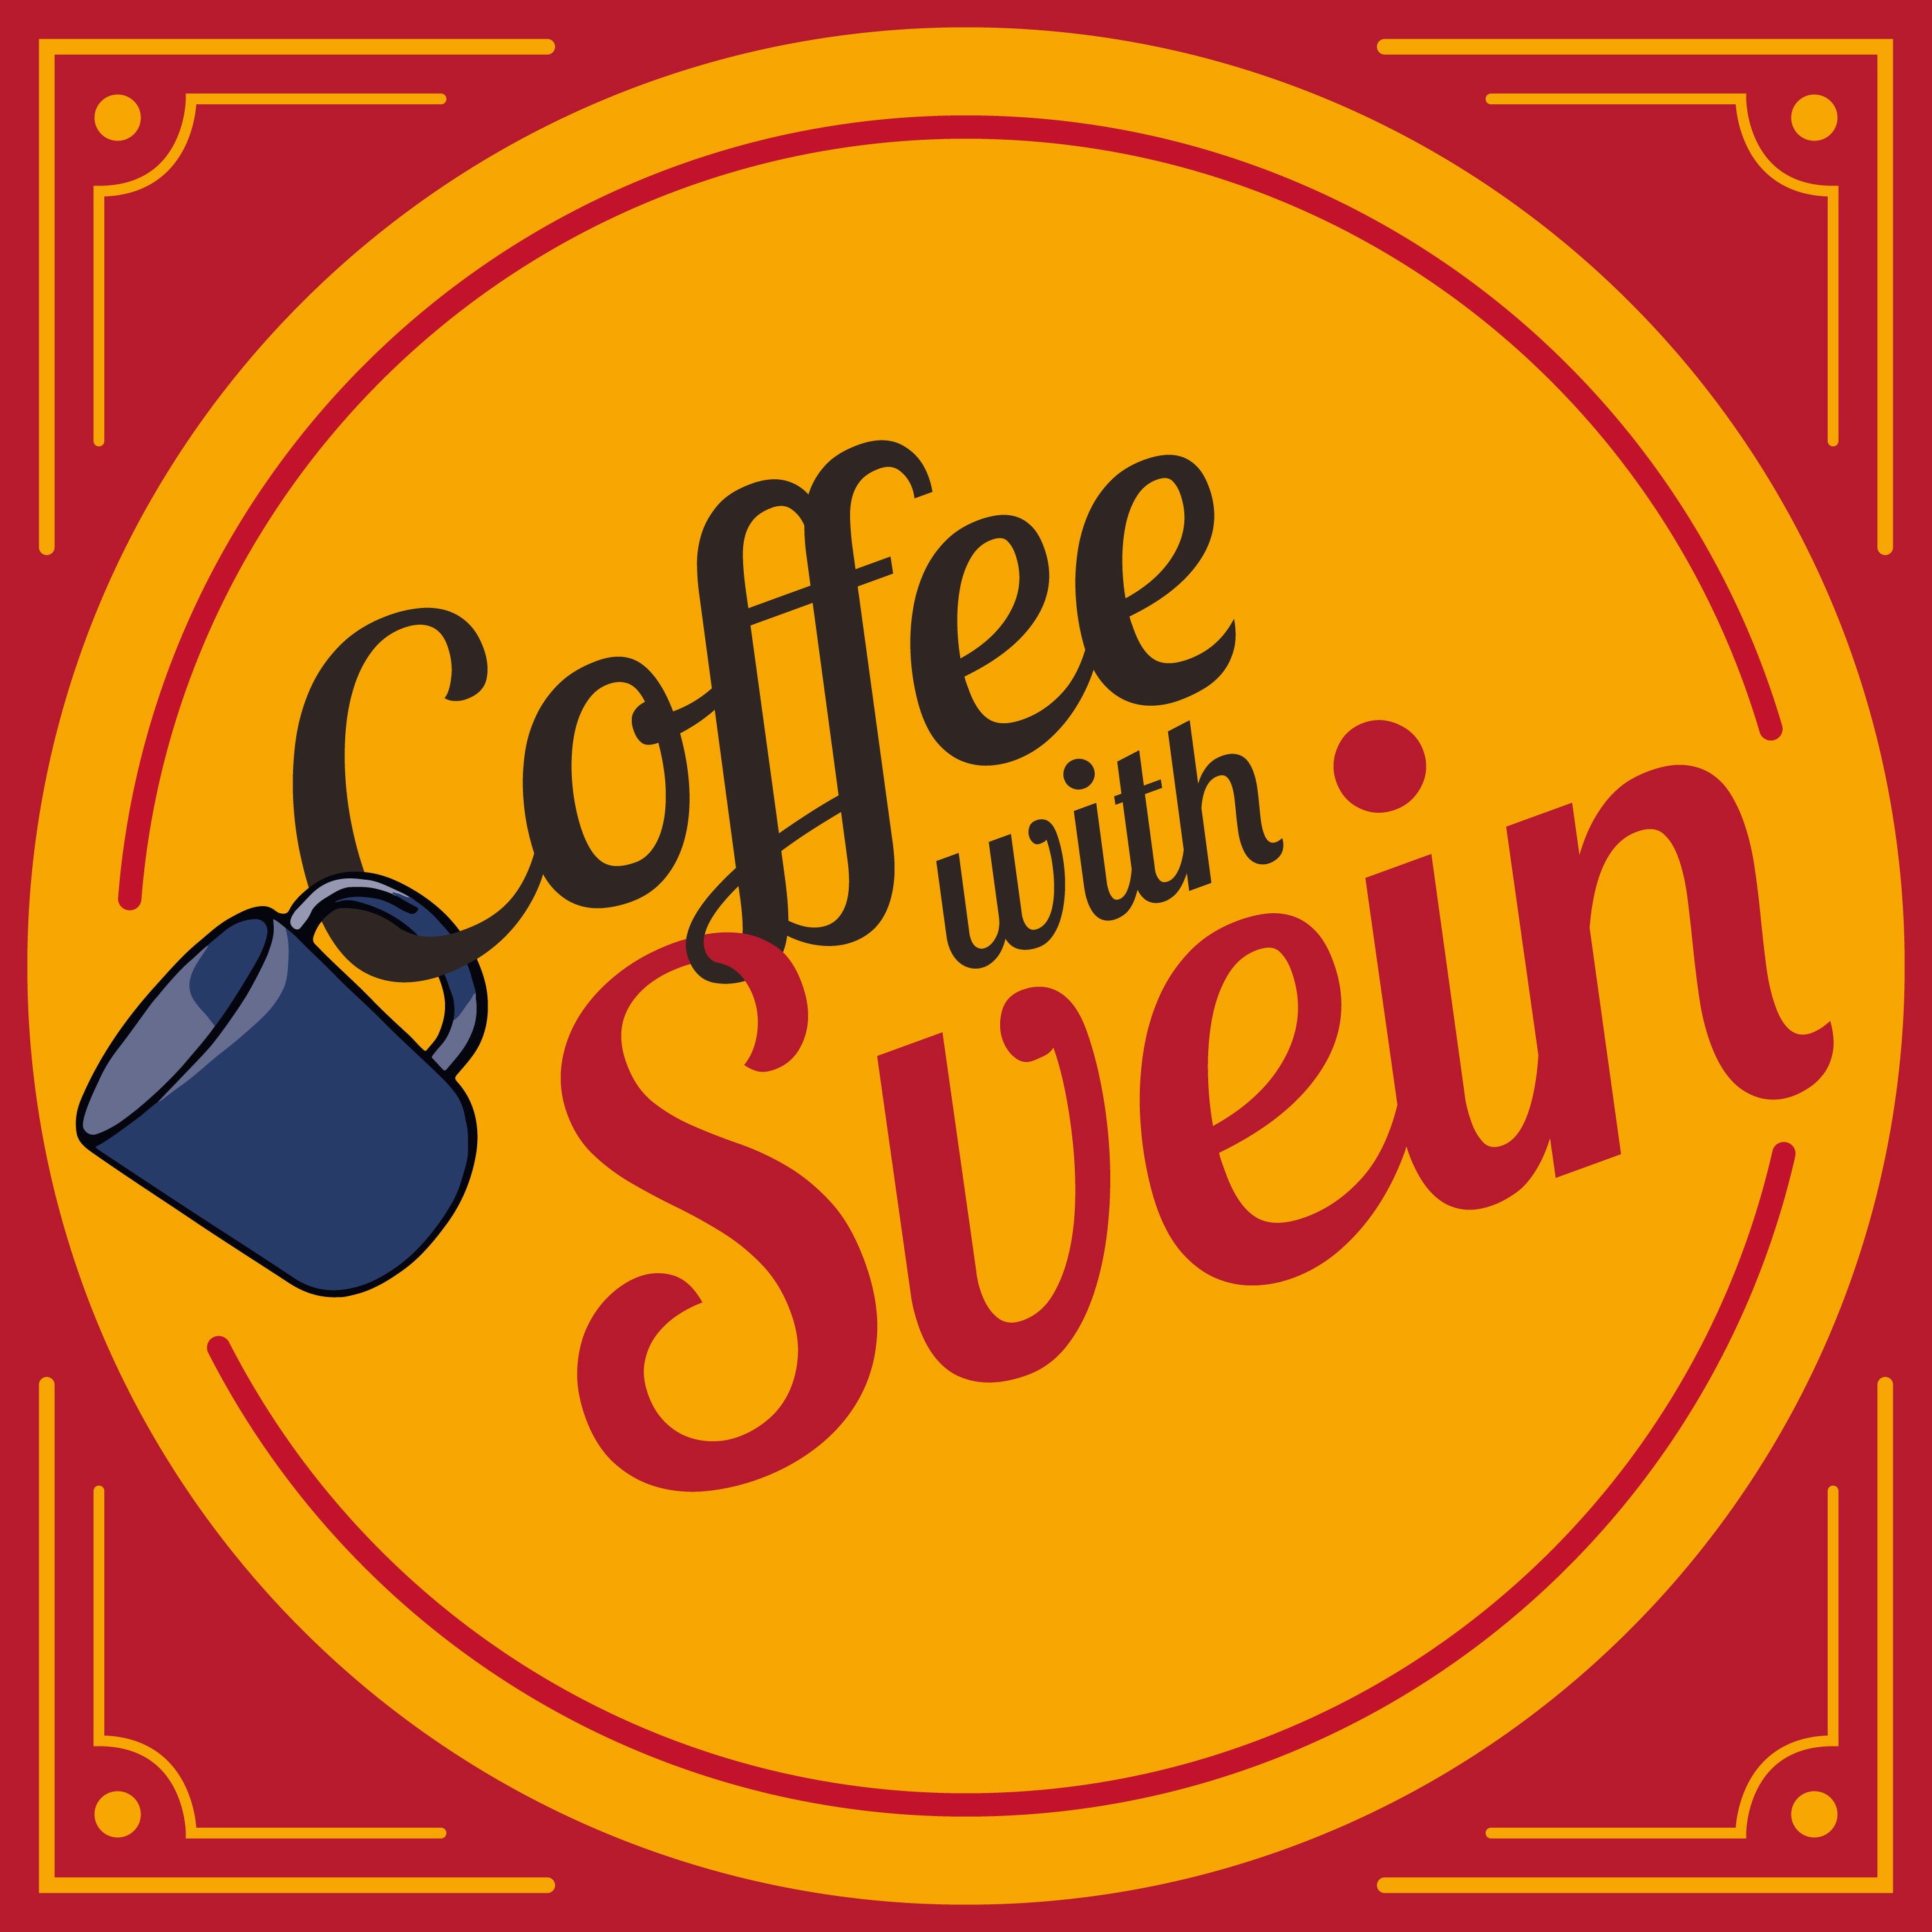 Coffee with Svein